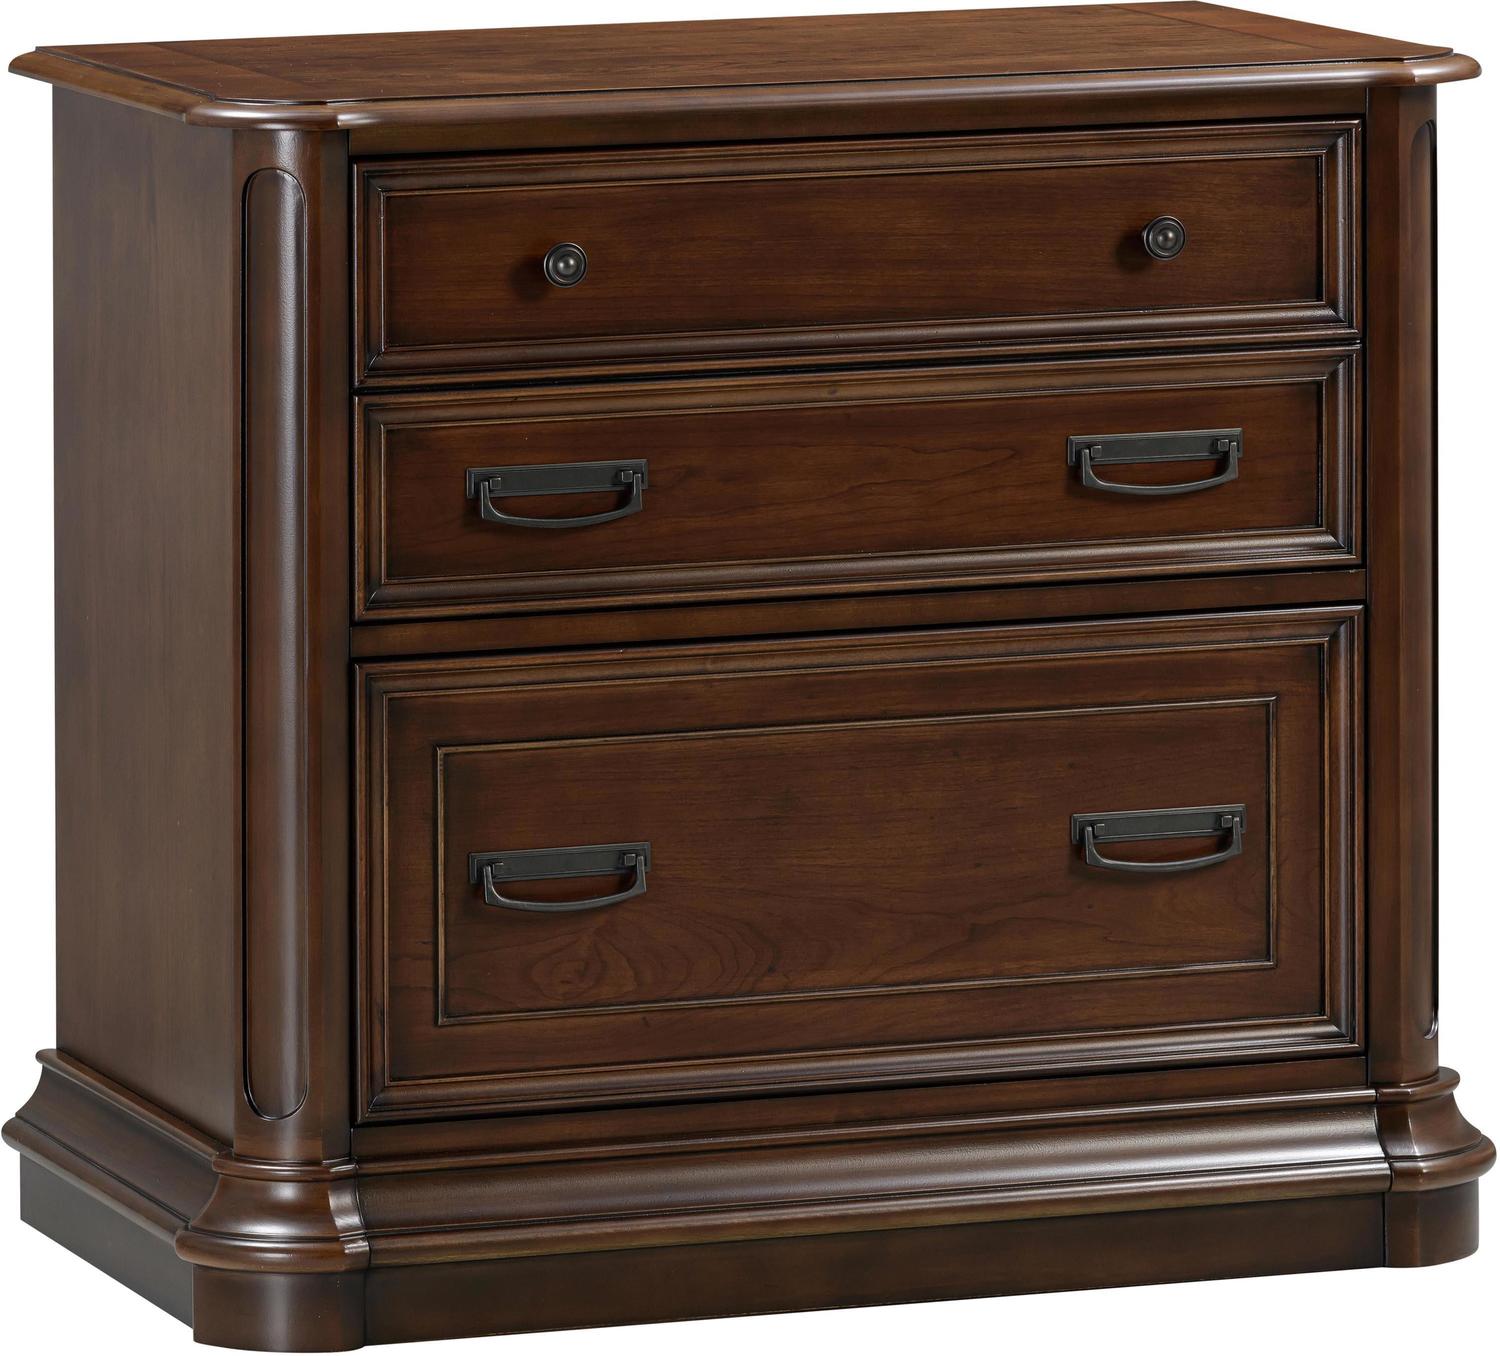 4 drawer dresser Tov Furniture Cherry